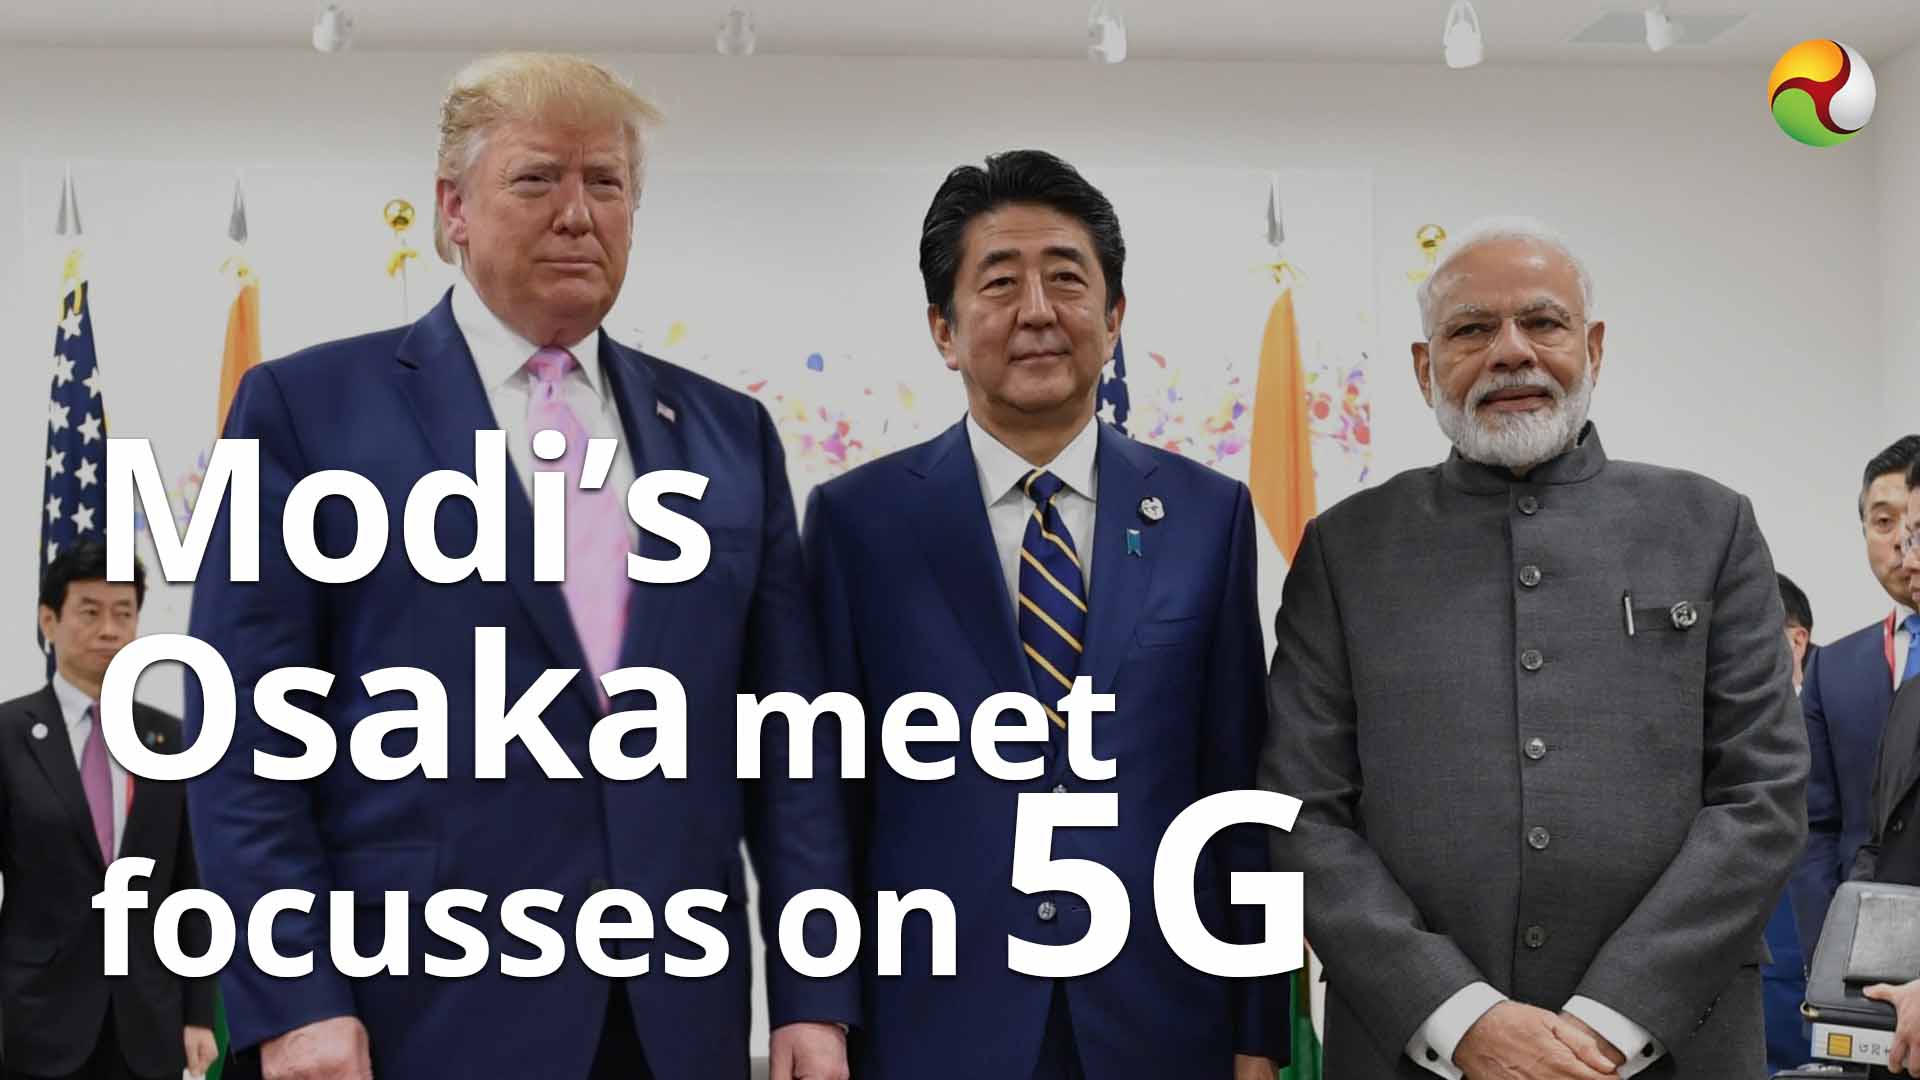 Modis Osaka meet focusses on 5G